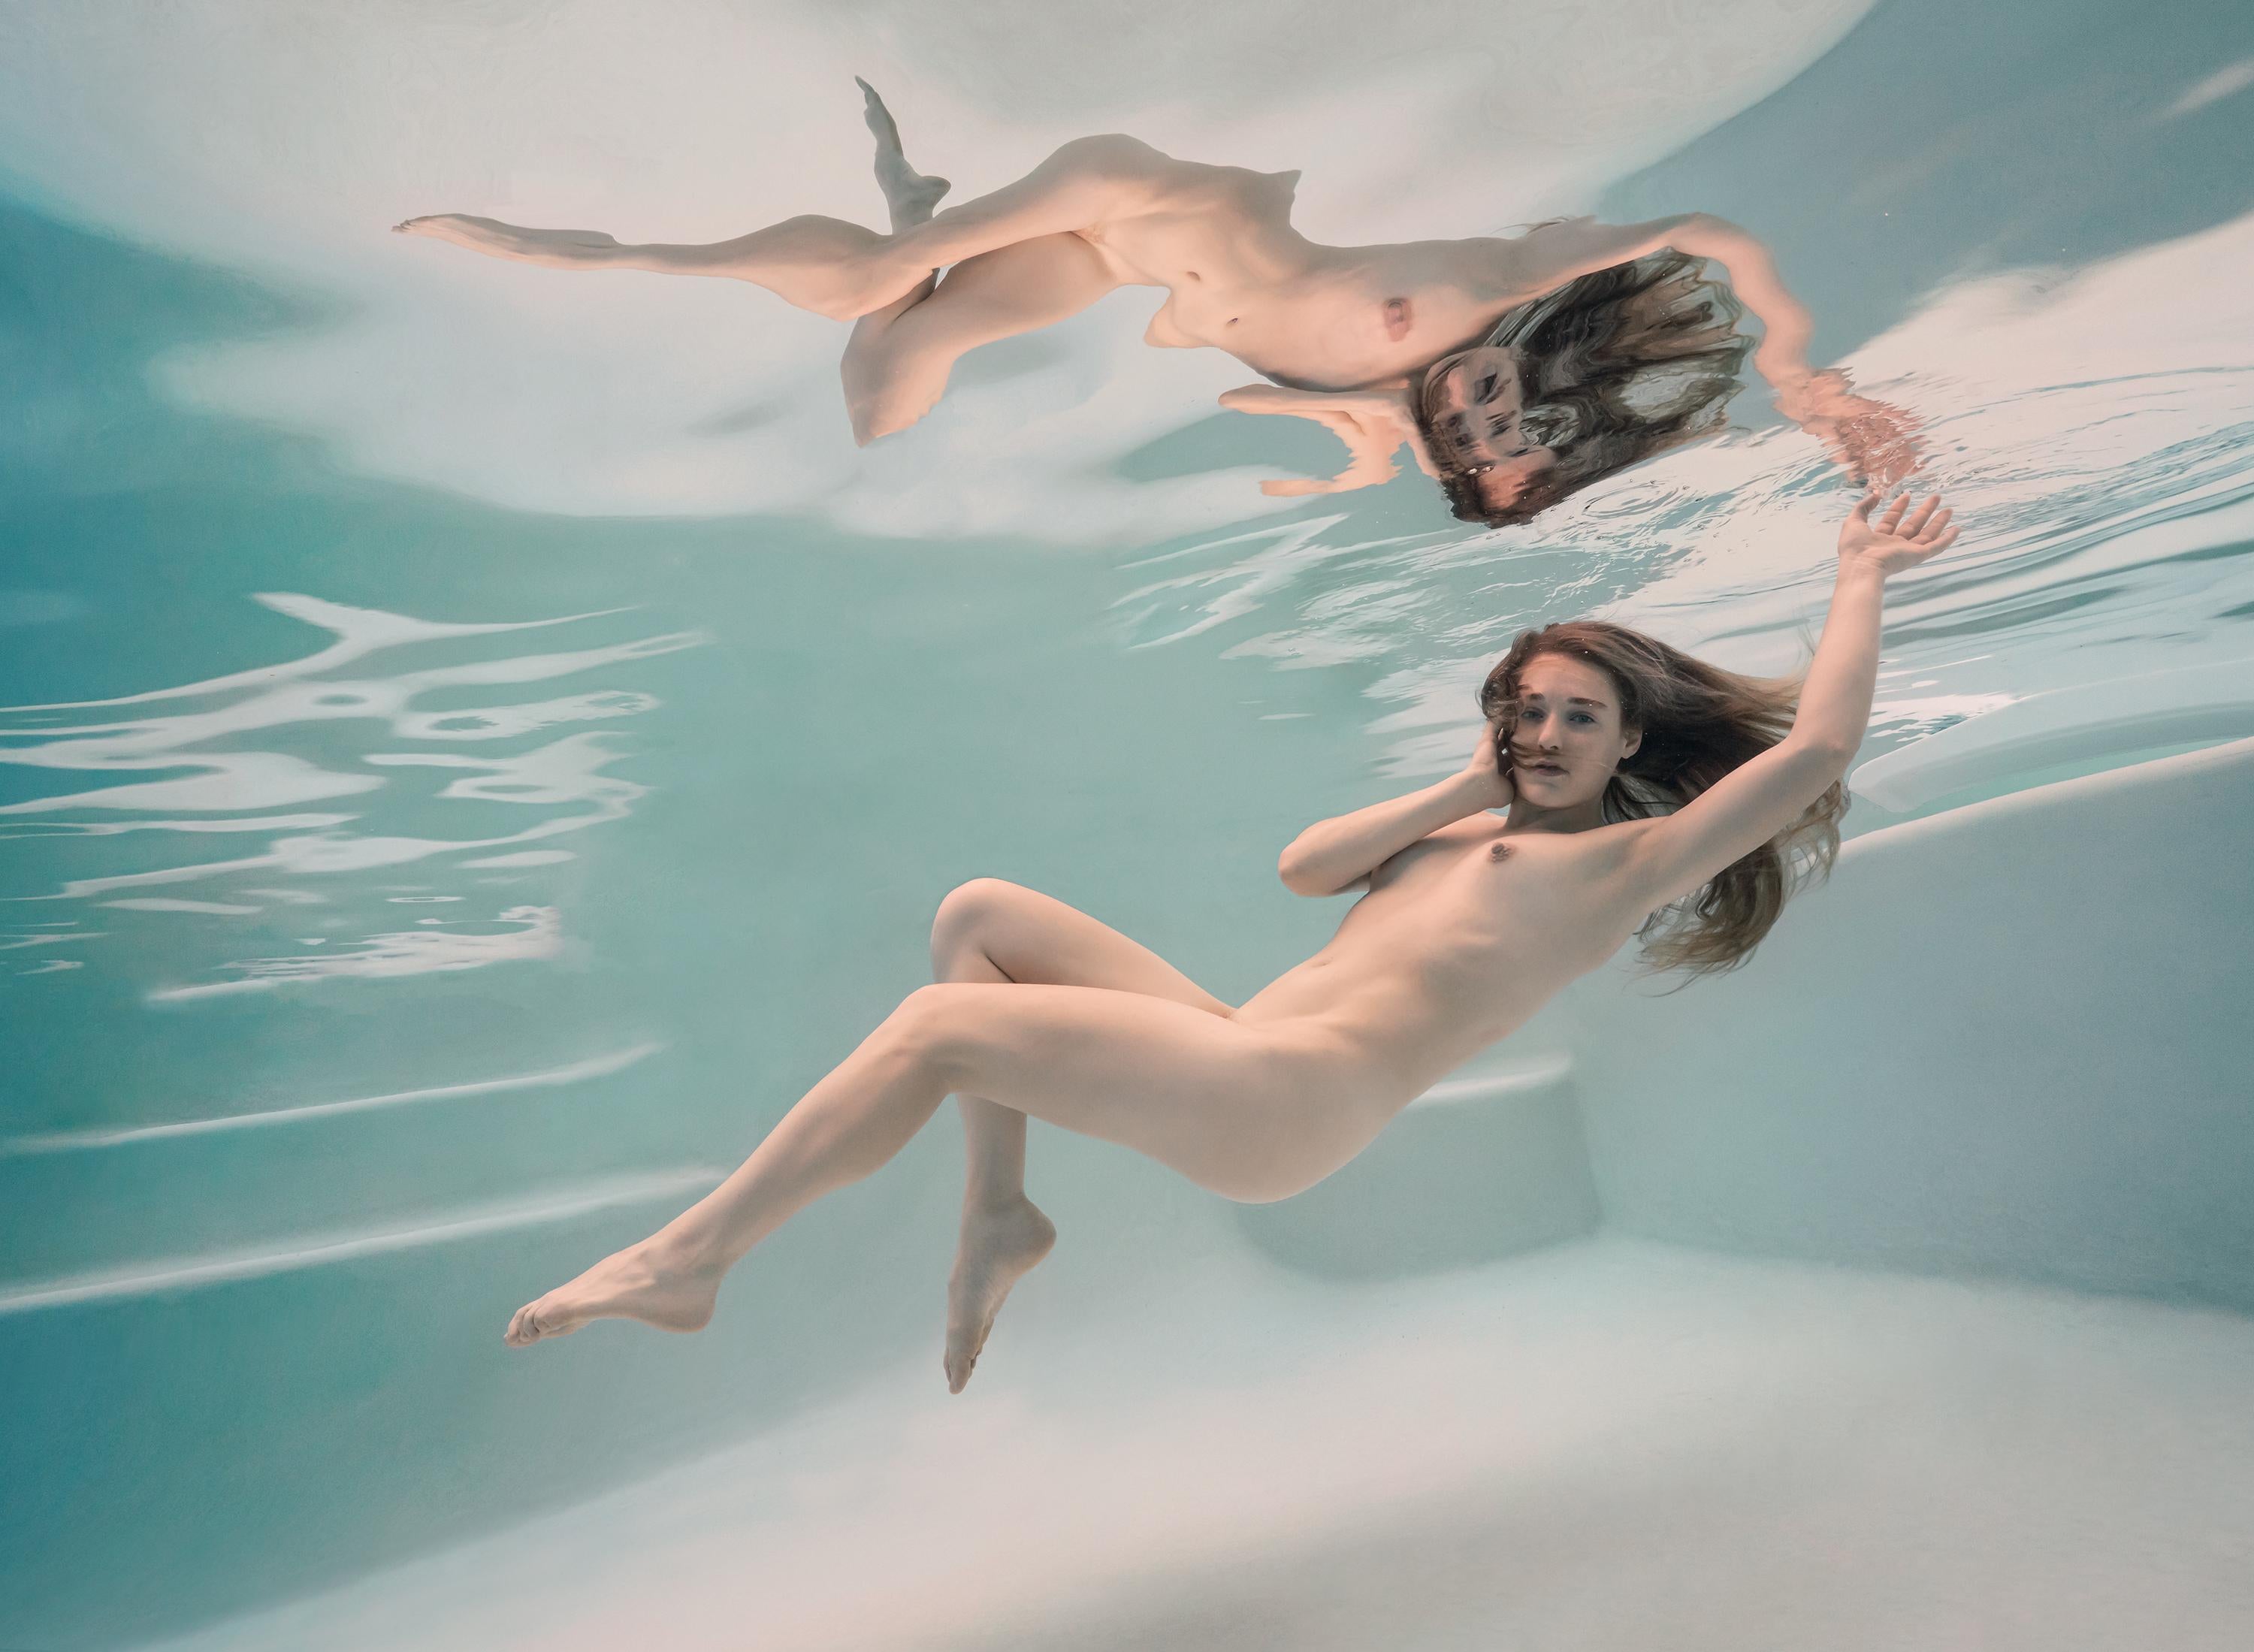 Alex Sher Nude Photograph - Zero Gravity Lounge III - underwater nude photograph - archival pigment 25x35"